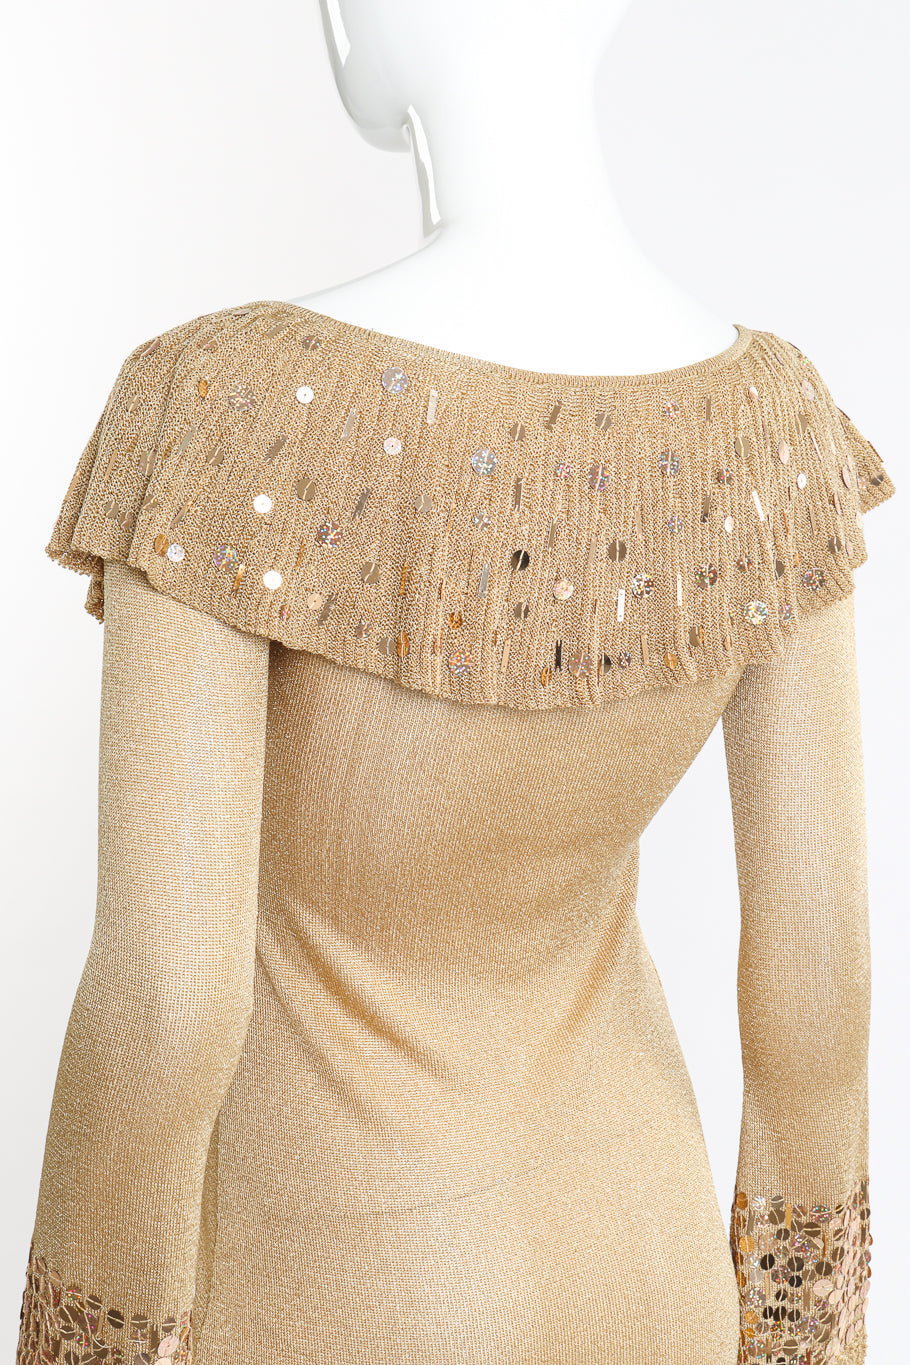 Vintage Blumarine gold sequin ruffle knit dress close up view of the back sequin bib on mannequin @Recess LA